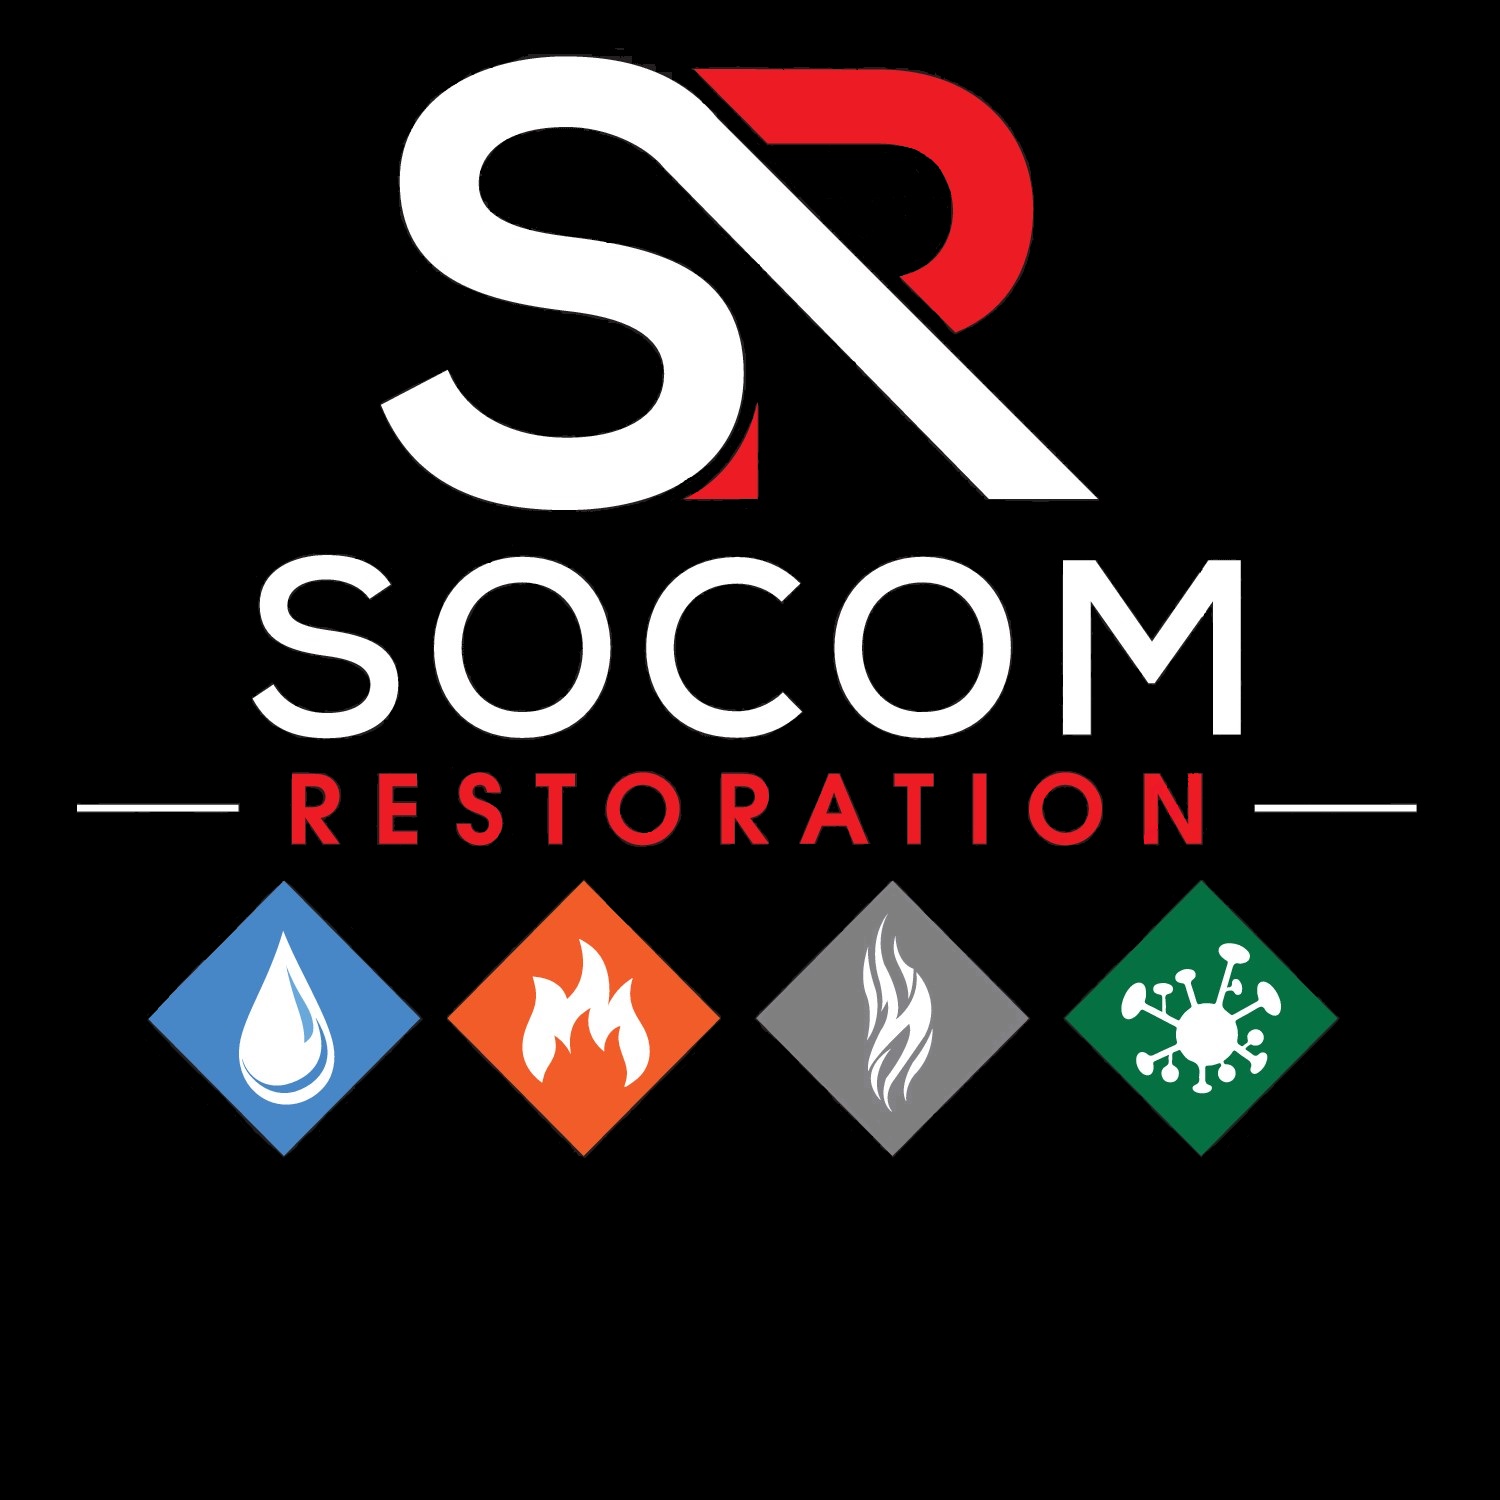 Teton Services, Inc. dba Socom Restoration Logo